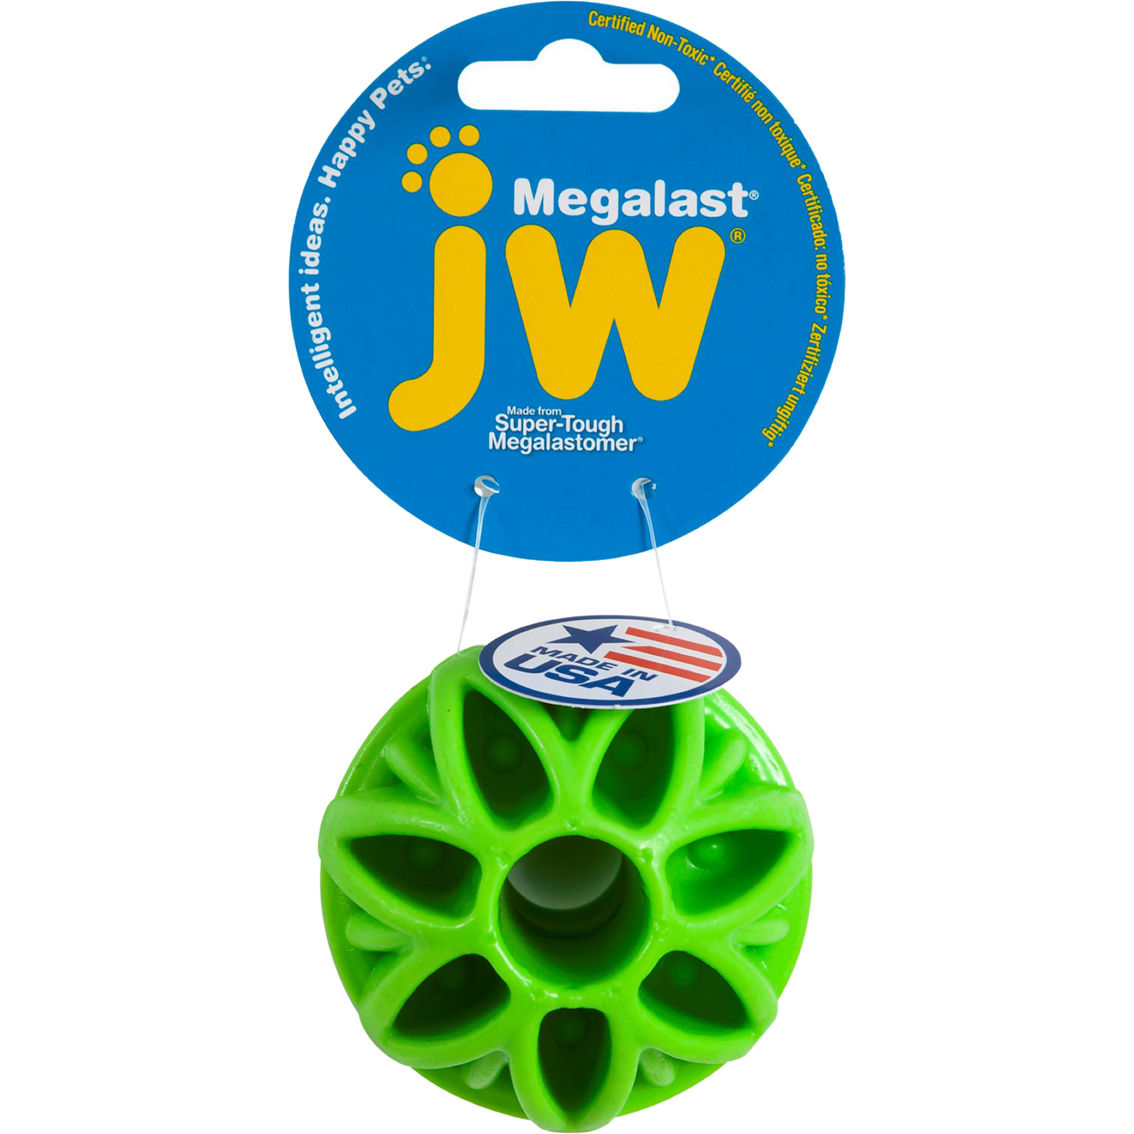 Petmate Jw Megalast Ball Dog Toy